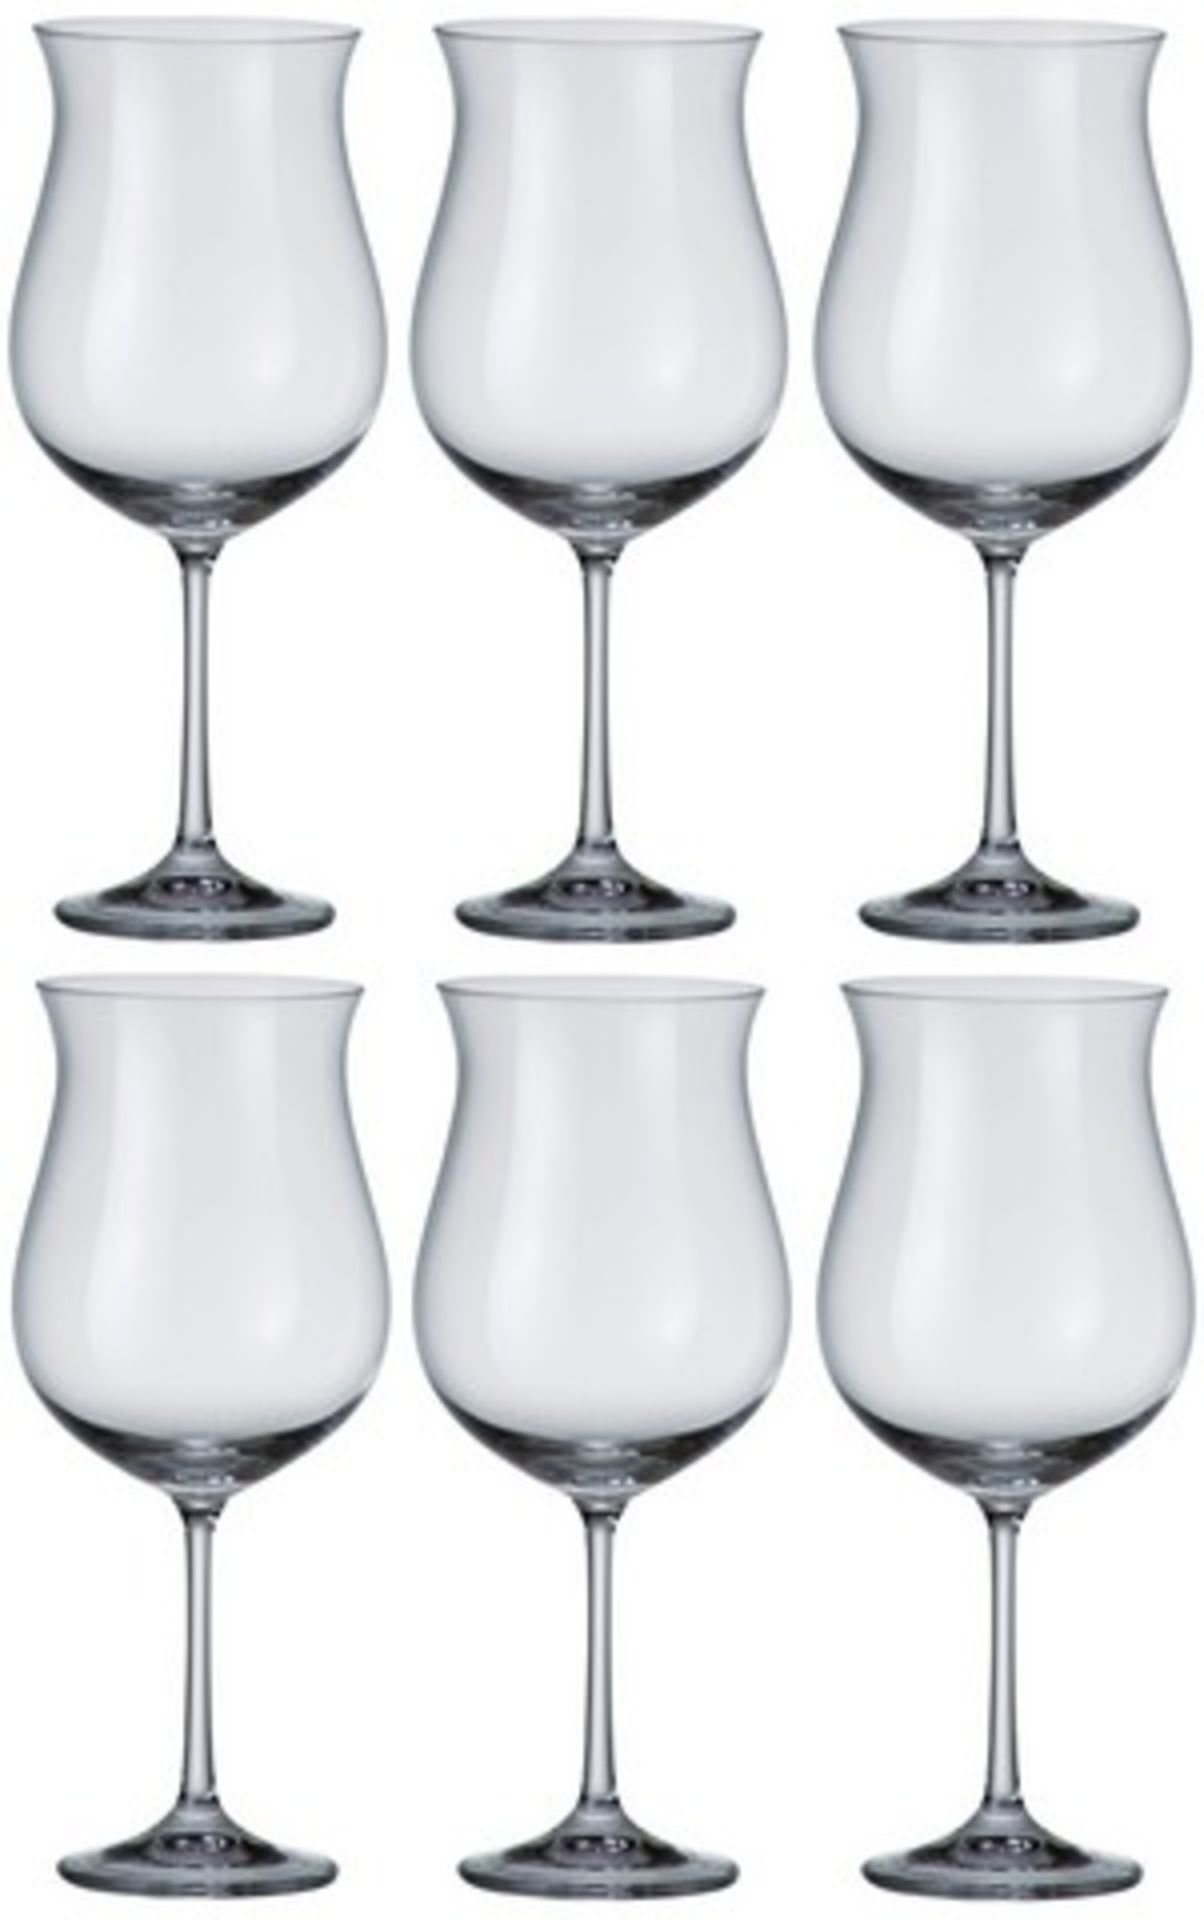 V Brand New Pack of Six 640ml Red Wine Glasses - Large Sized Bowl - Dishwasher Safe - Durable